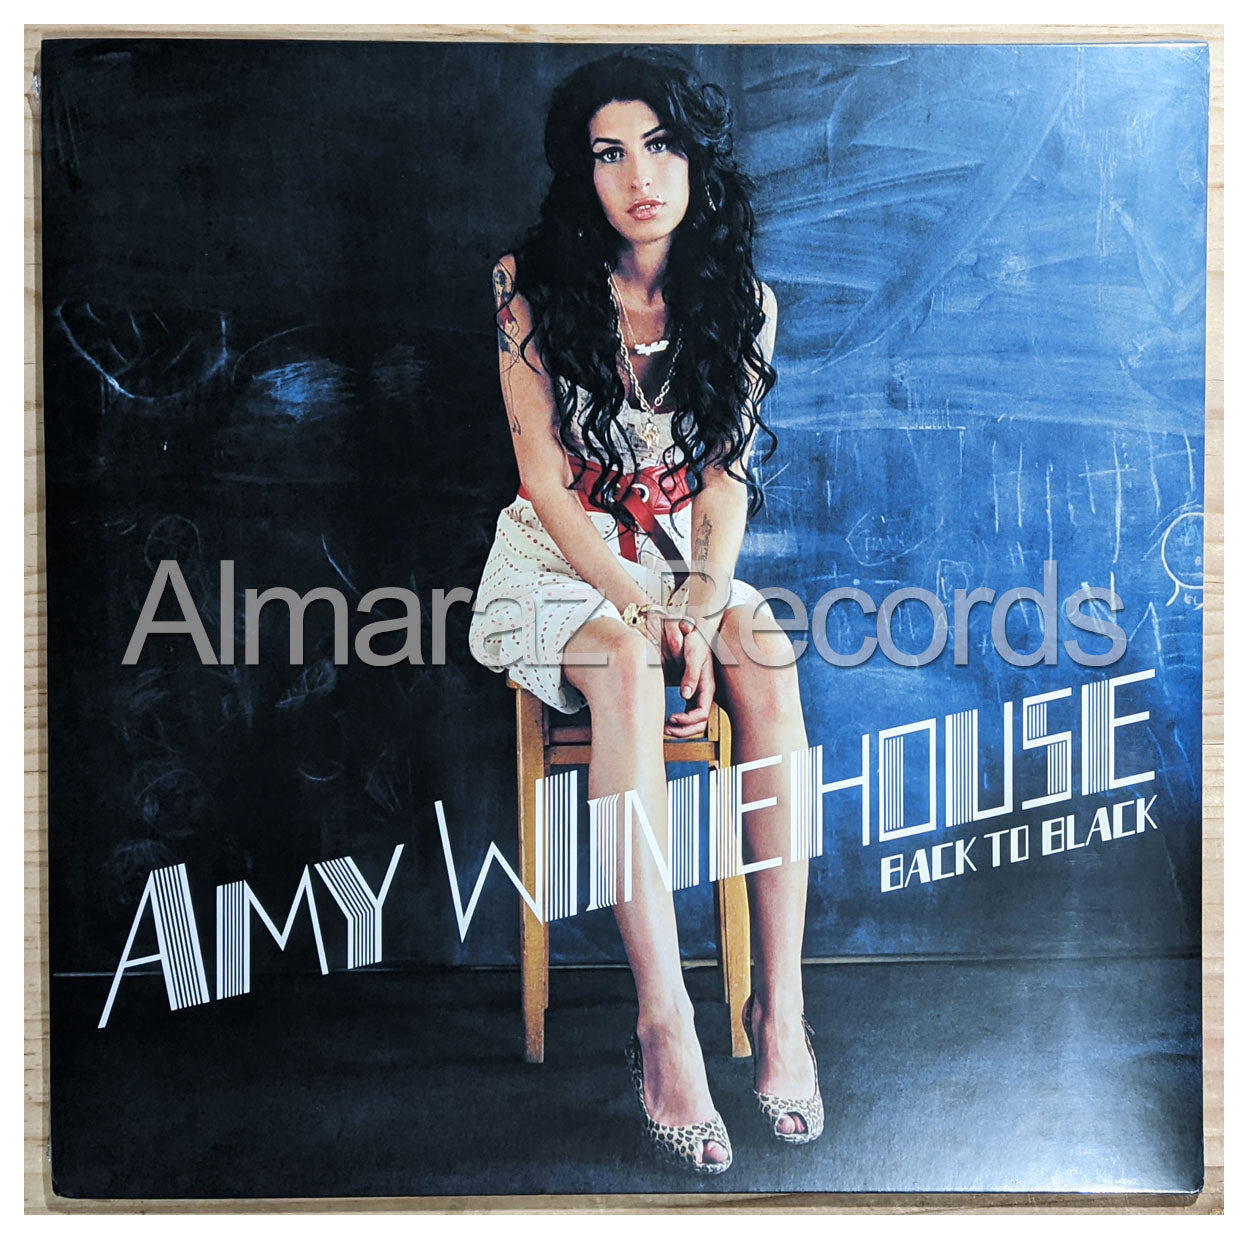 GENERICO Vinilo Amy Winehouse - Back To Black